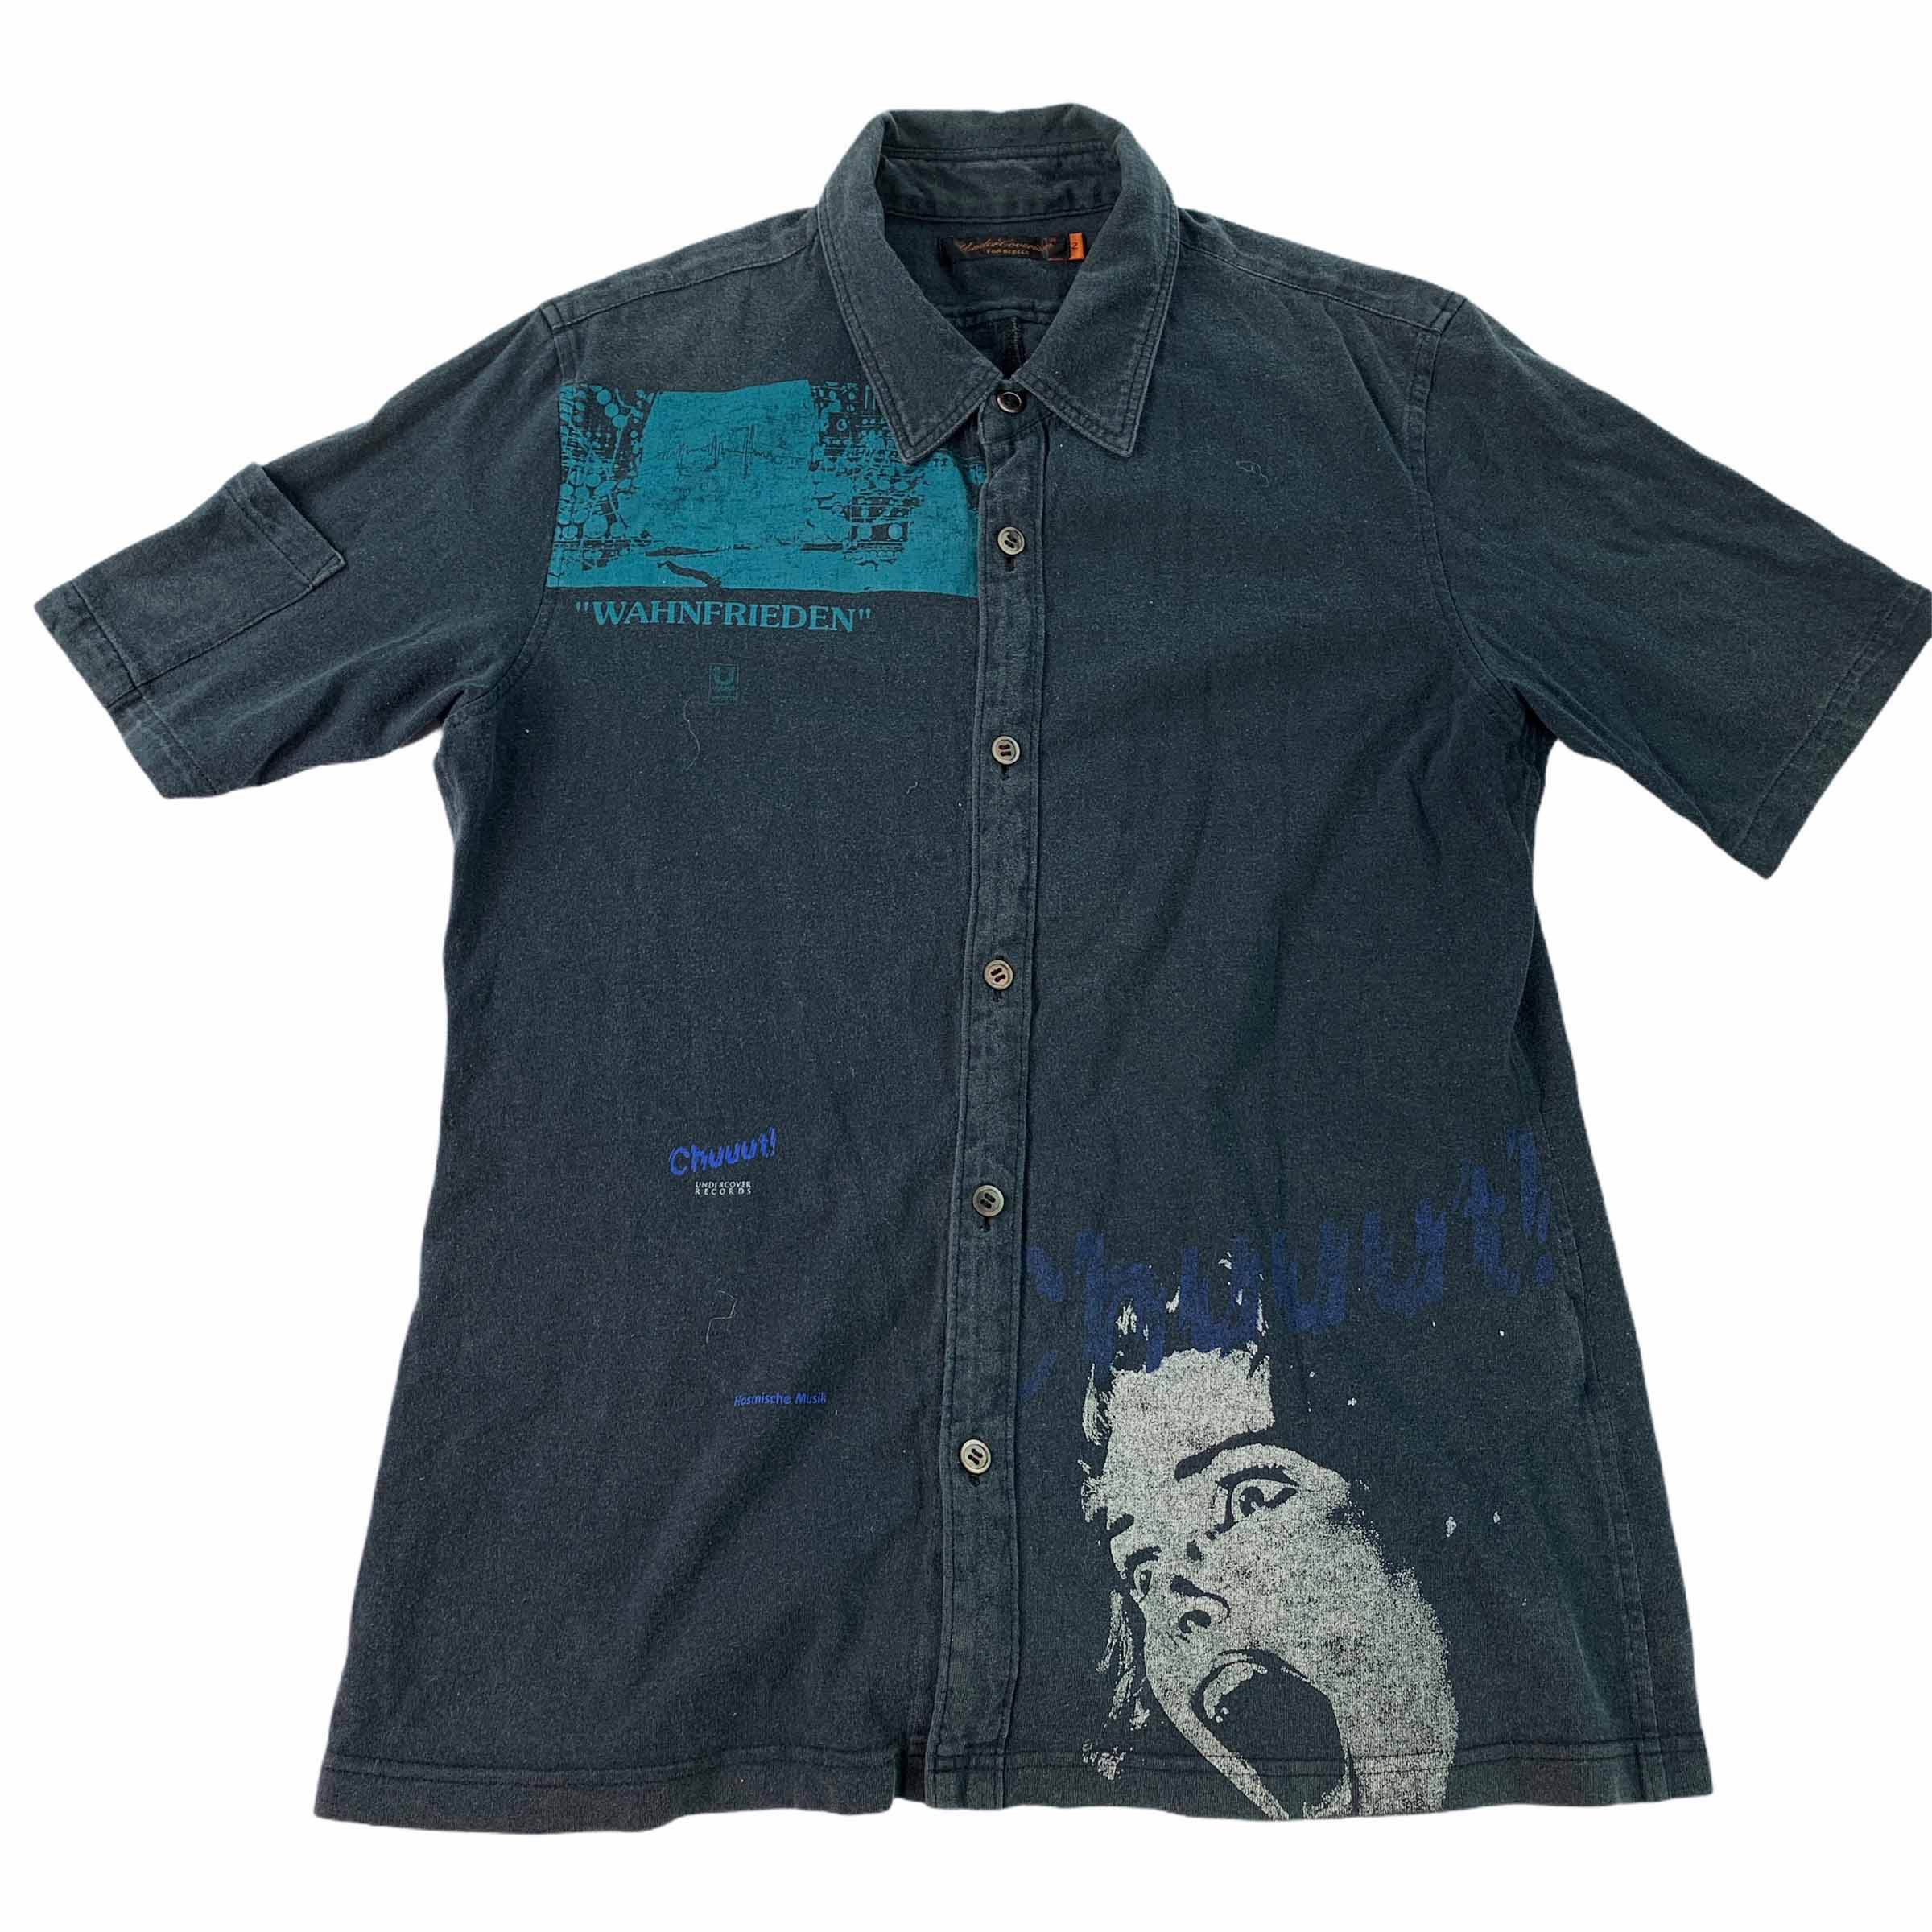 [Undercover] SS06 Button-up Shirt BK - Size M